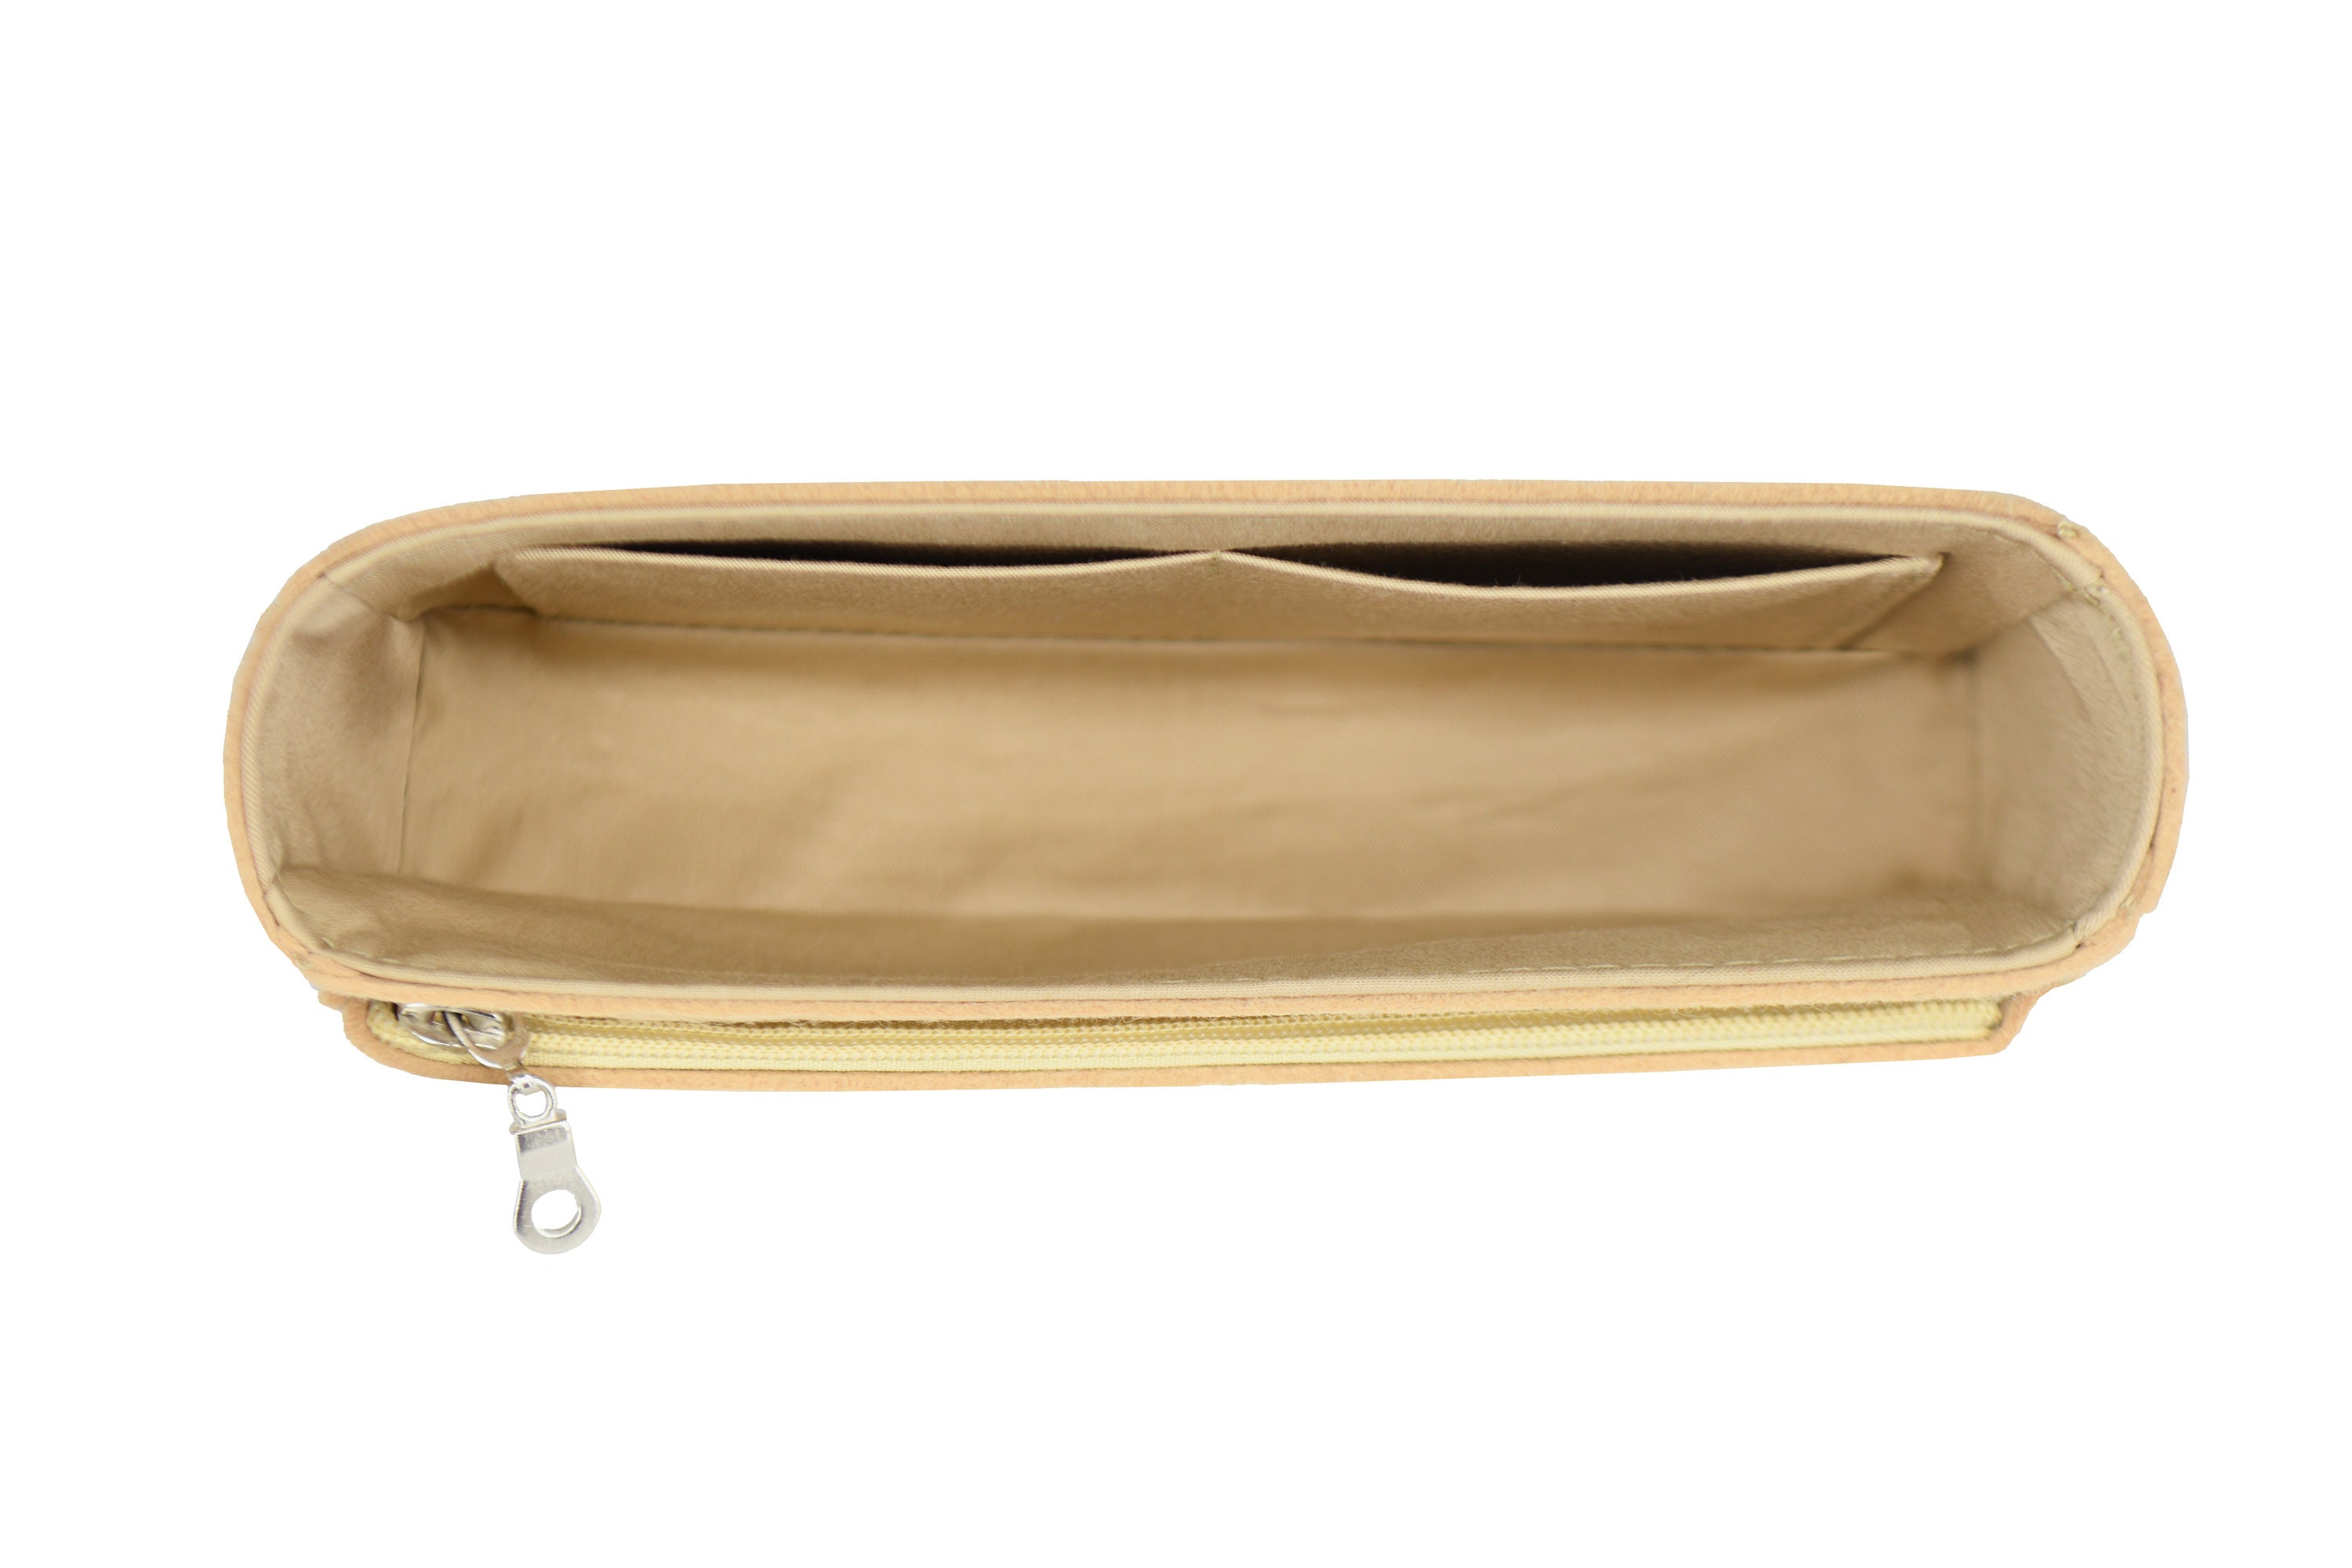 For double Classic Flap Bag Medium A01112-bottom Length 